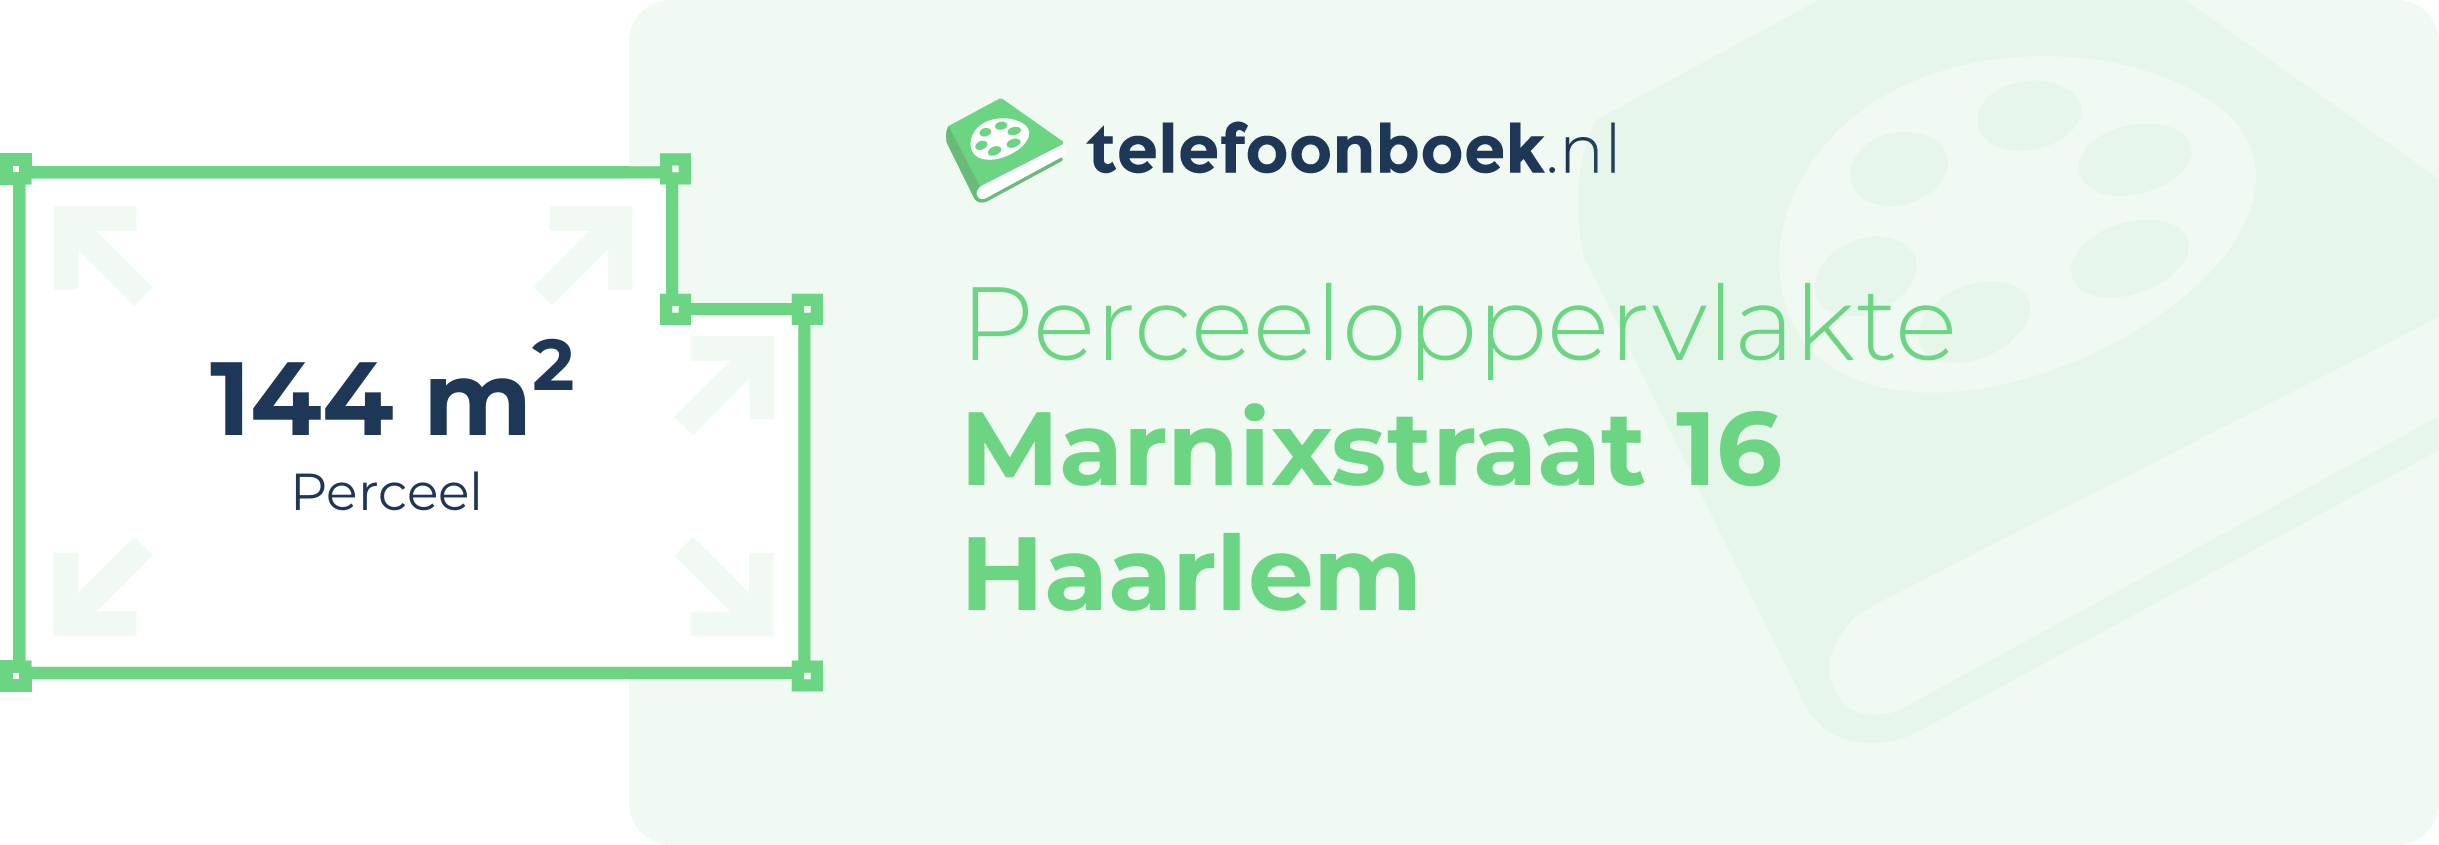 Perceeloppervlakte Marnixstraat 16 Haarlem